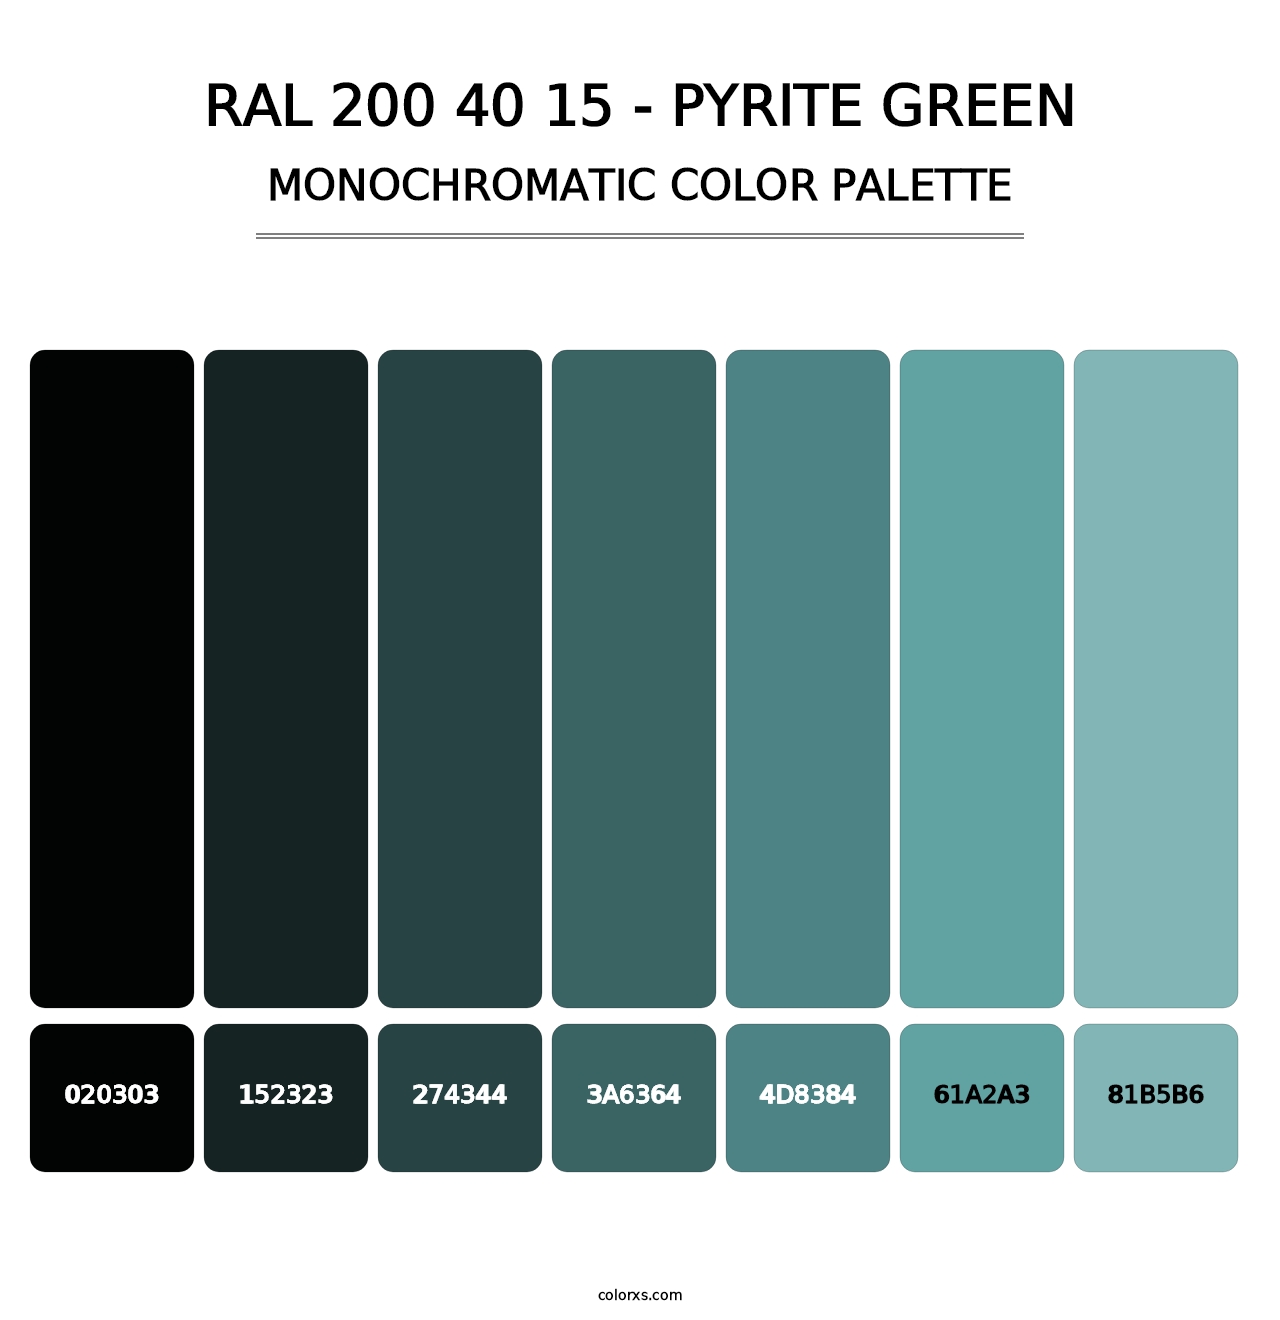 RAL 200 40 15 - Pyrite Green - Monochromatic Color Palette